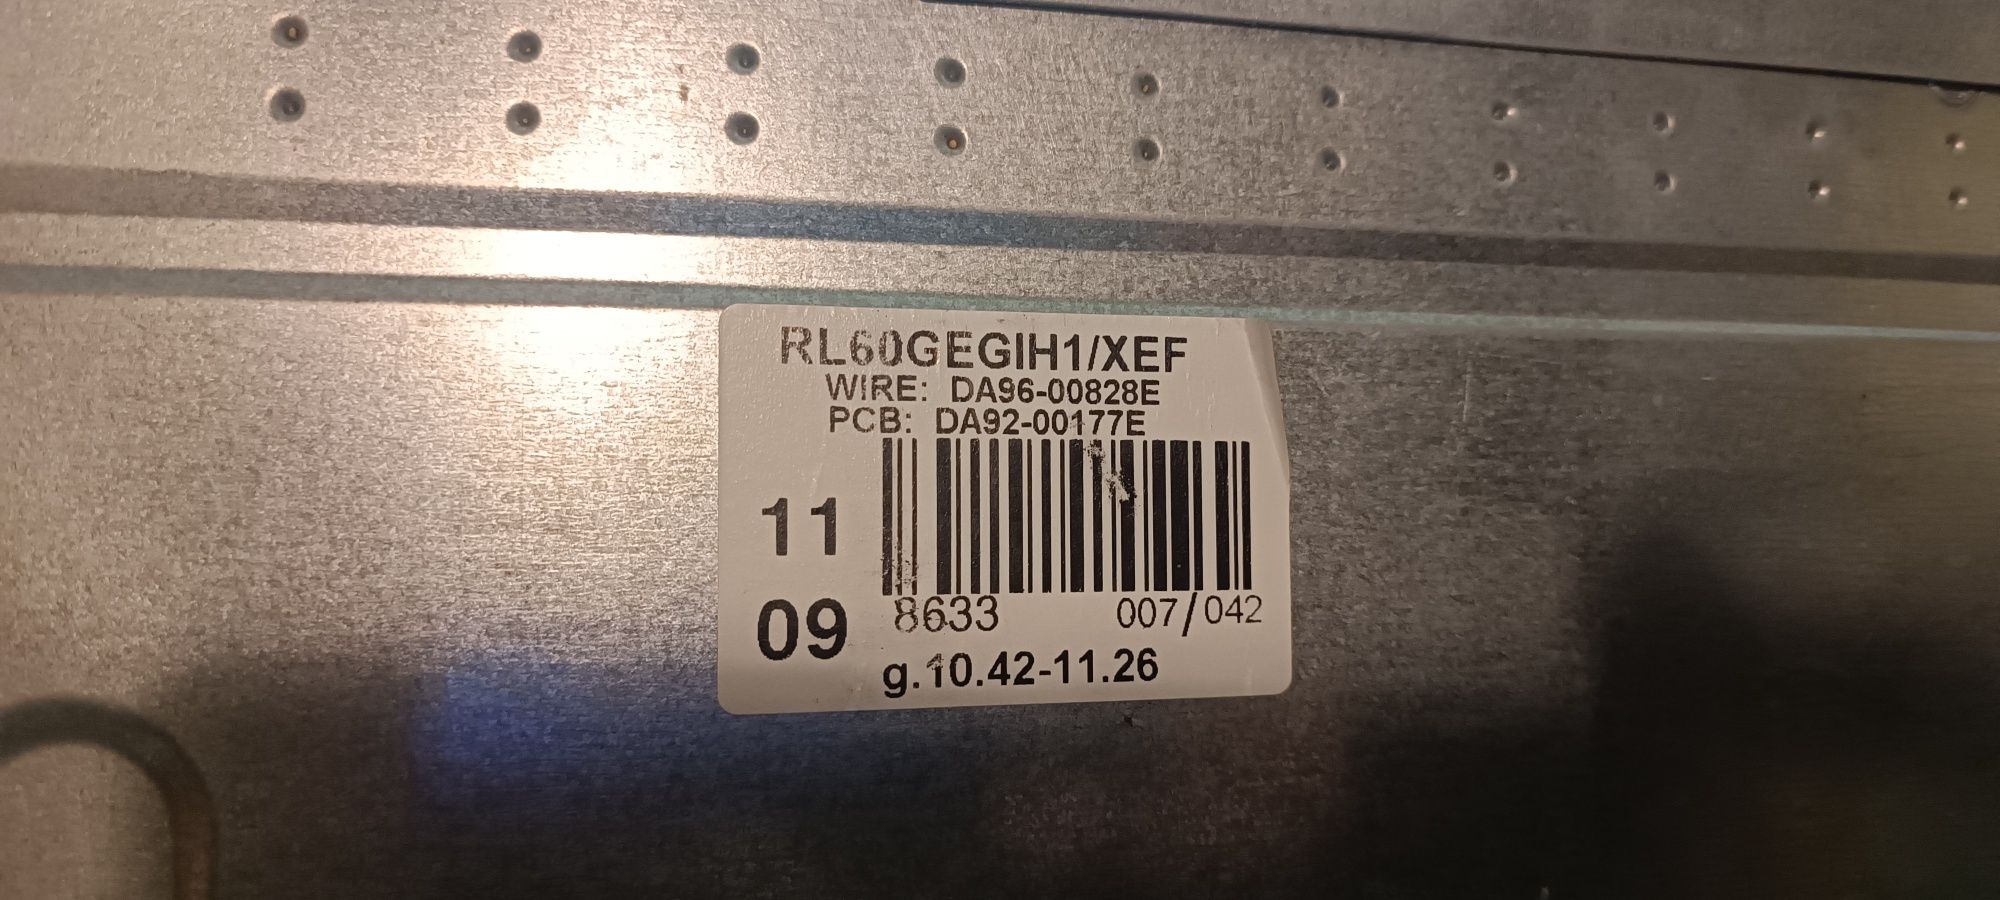 Combina frigorifica Samsung rl60gegih1/xef inaltime 200cm